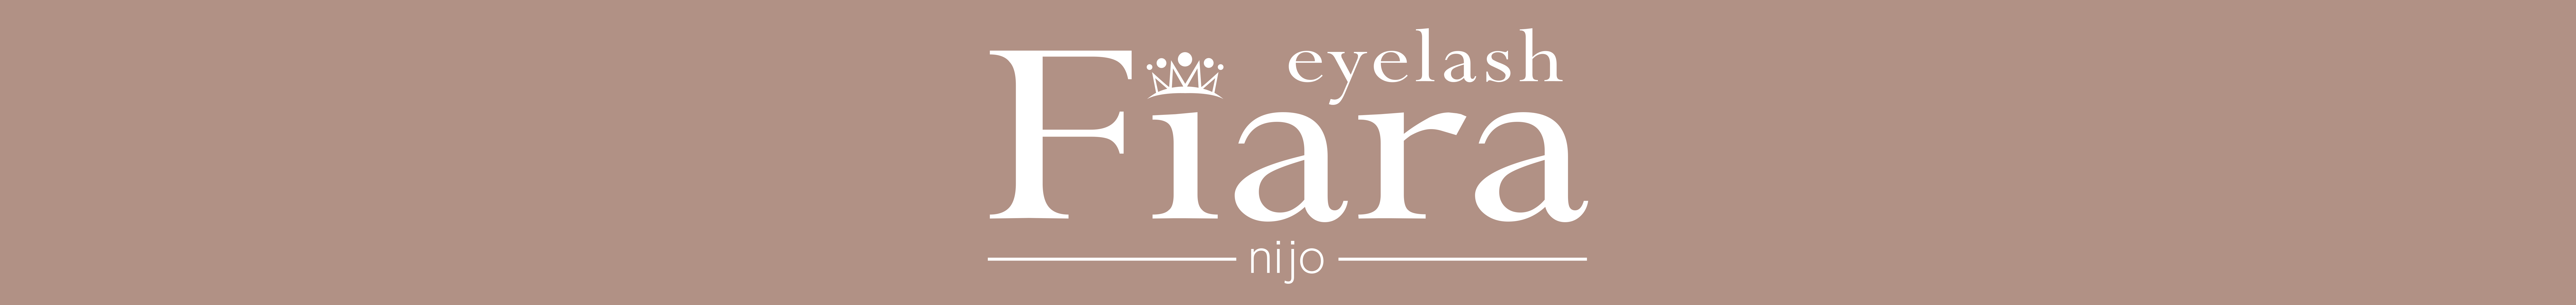 eyelash Fiara nijo logo